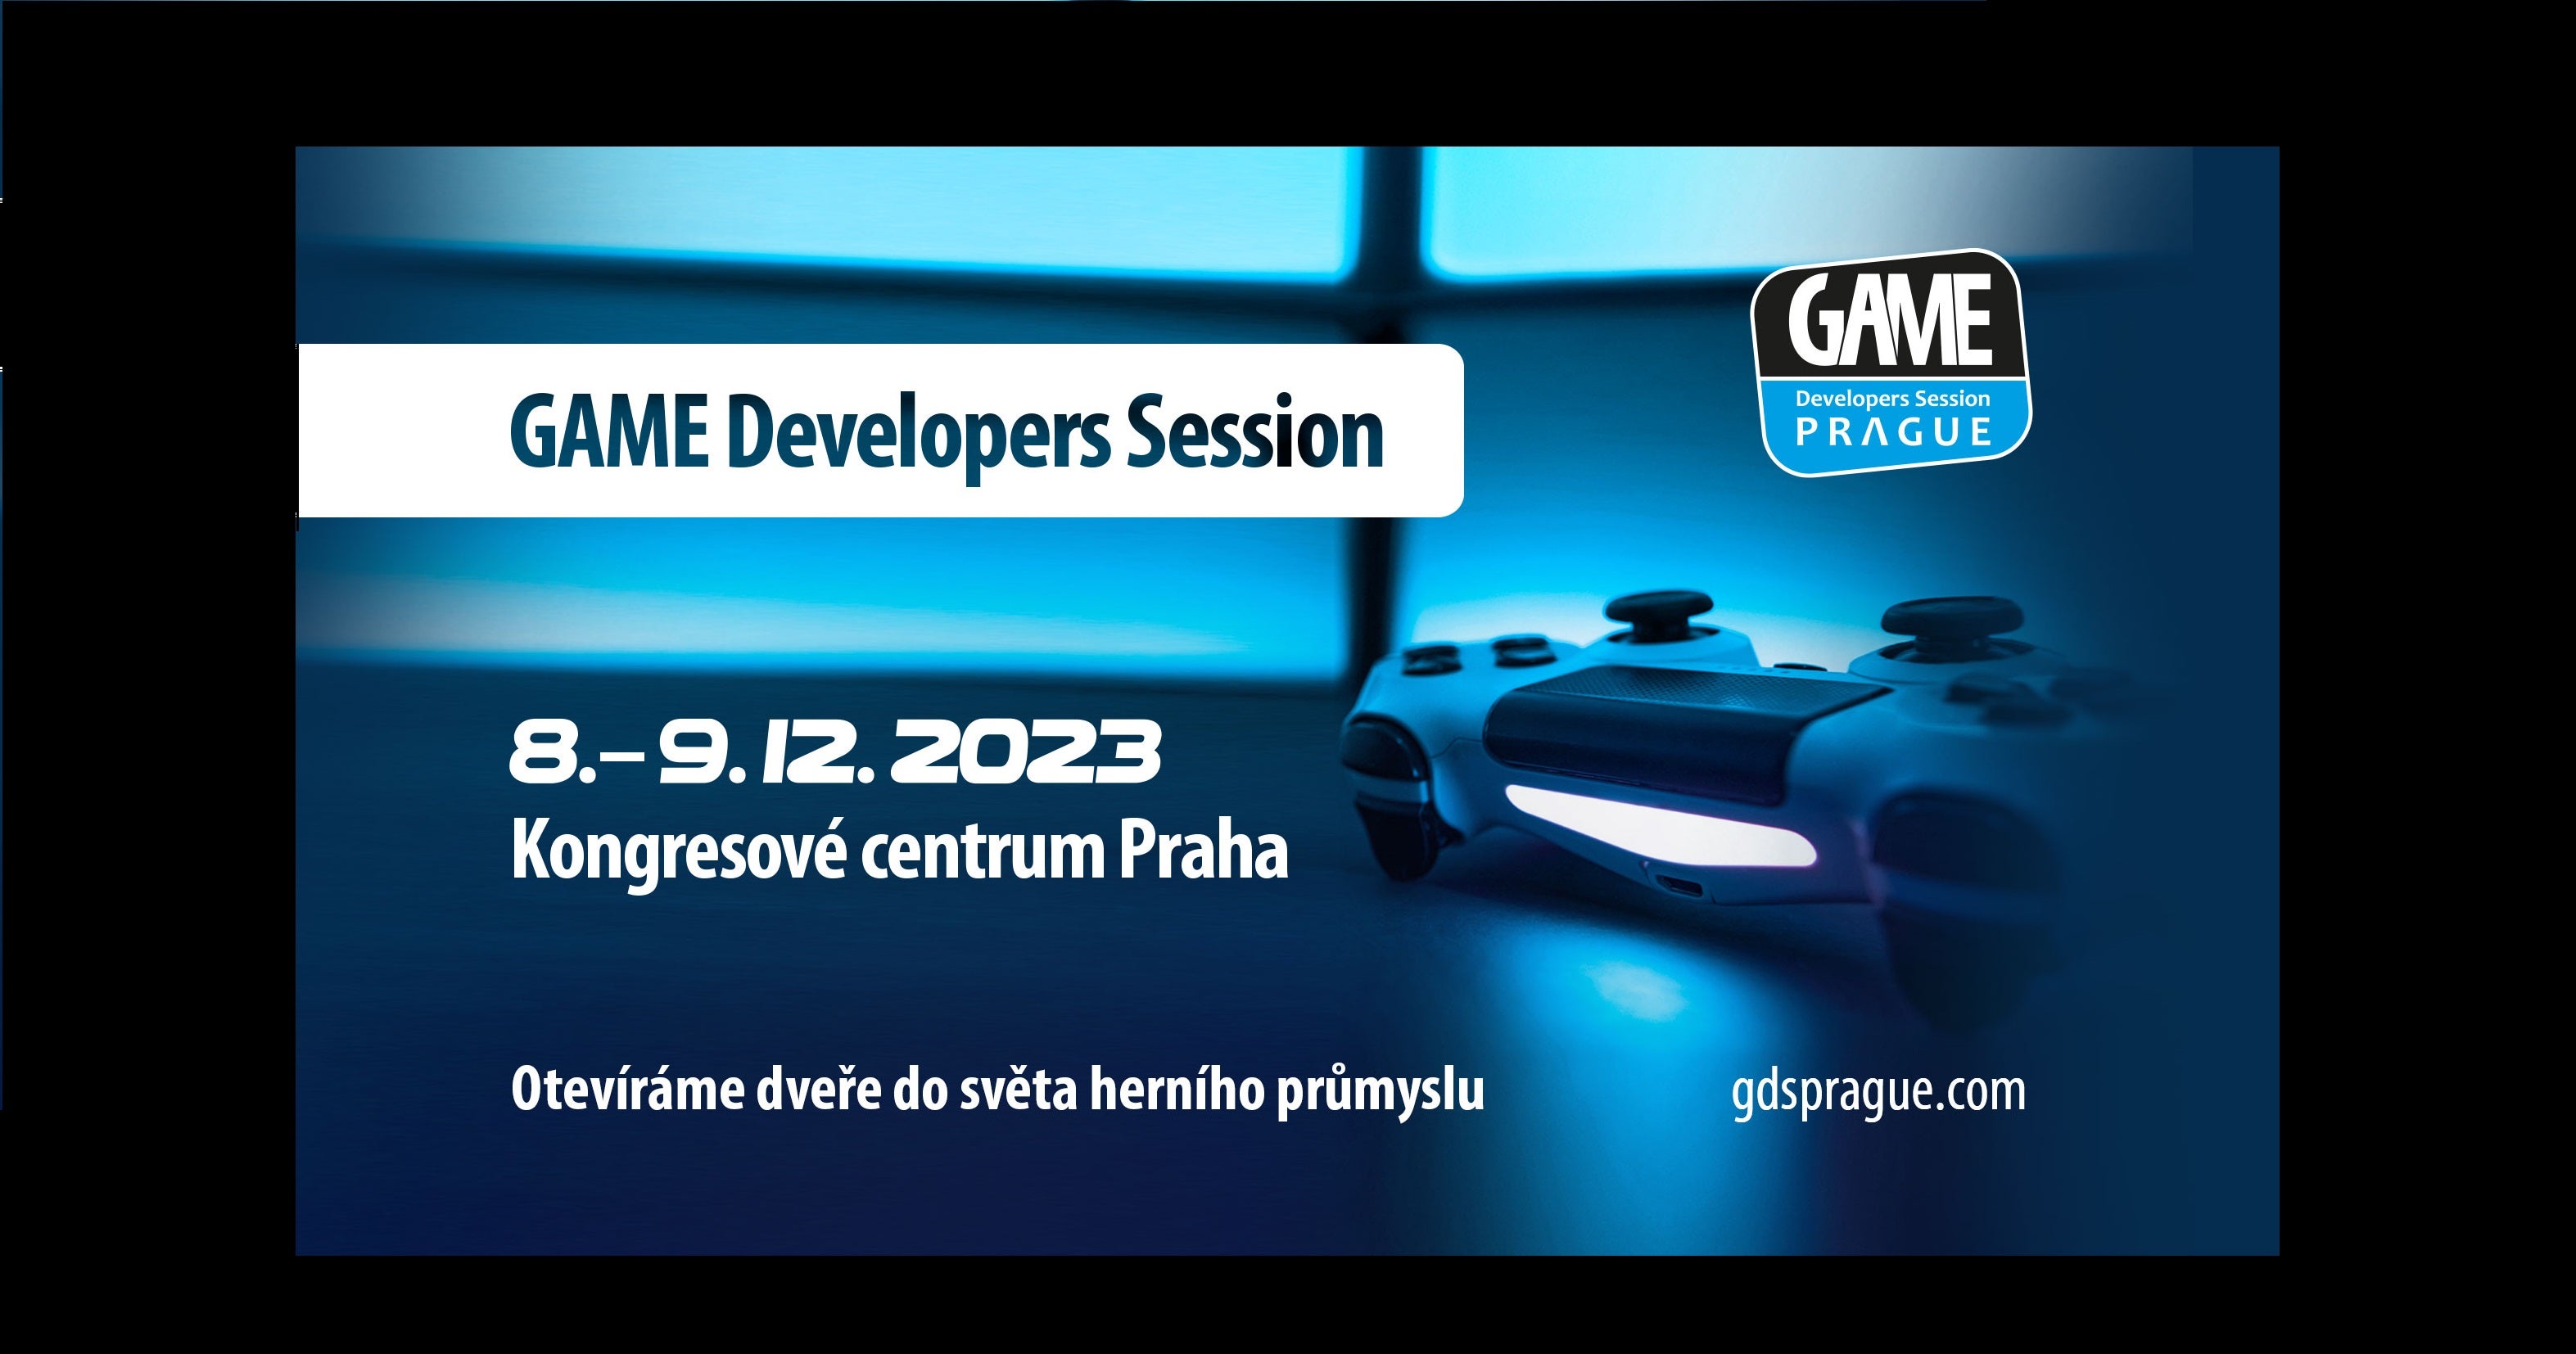 GAME Developers Session - PUBLIC DAY PASS - PÁTEK 8.12.- Praha -Kongresové Centrum Praha Praha 4 5. května 1640/65, Praha 4 140 21